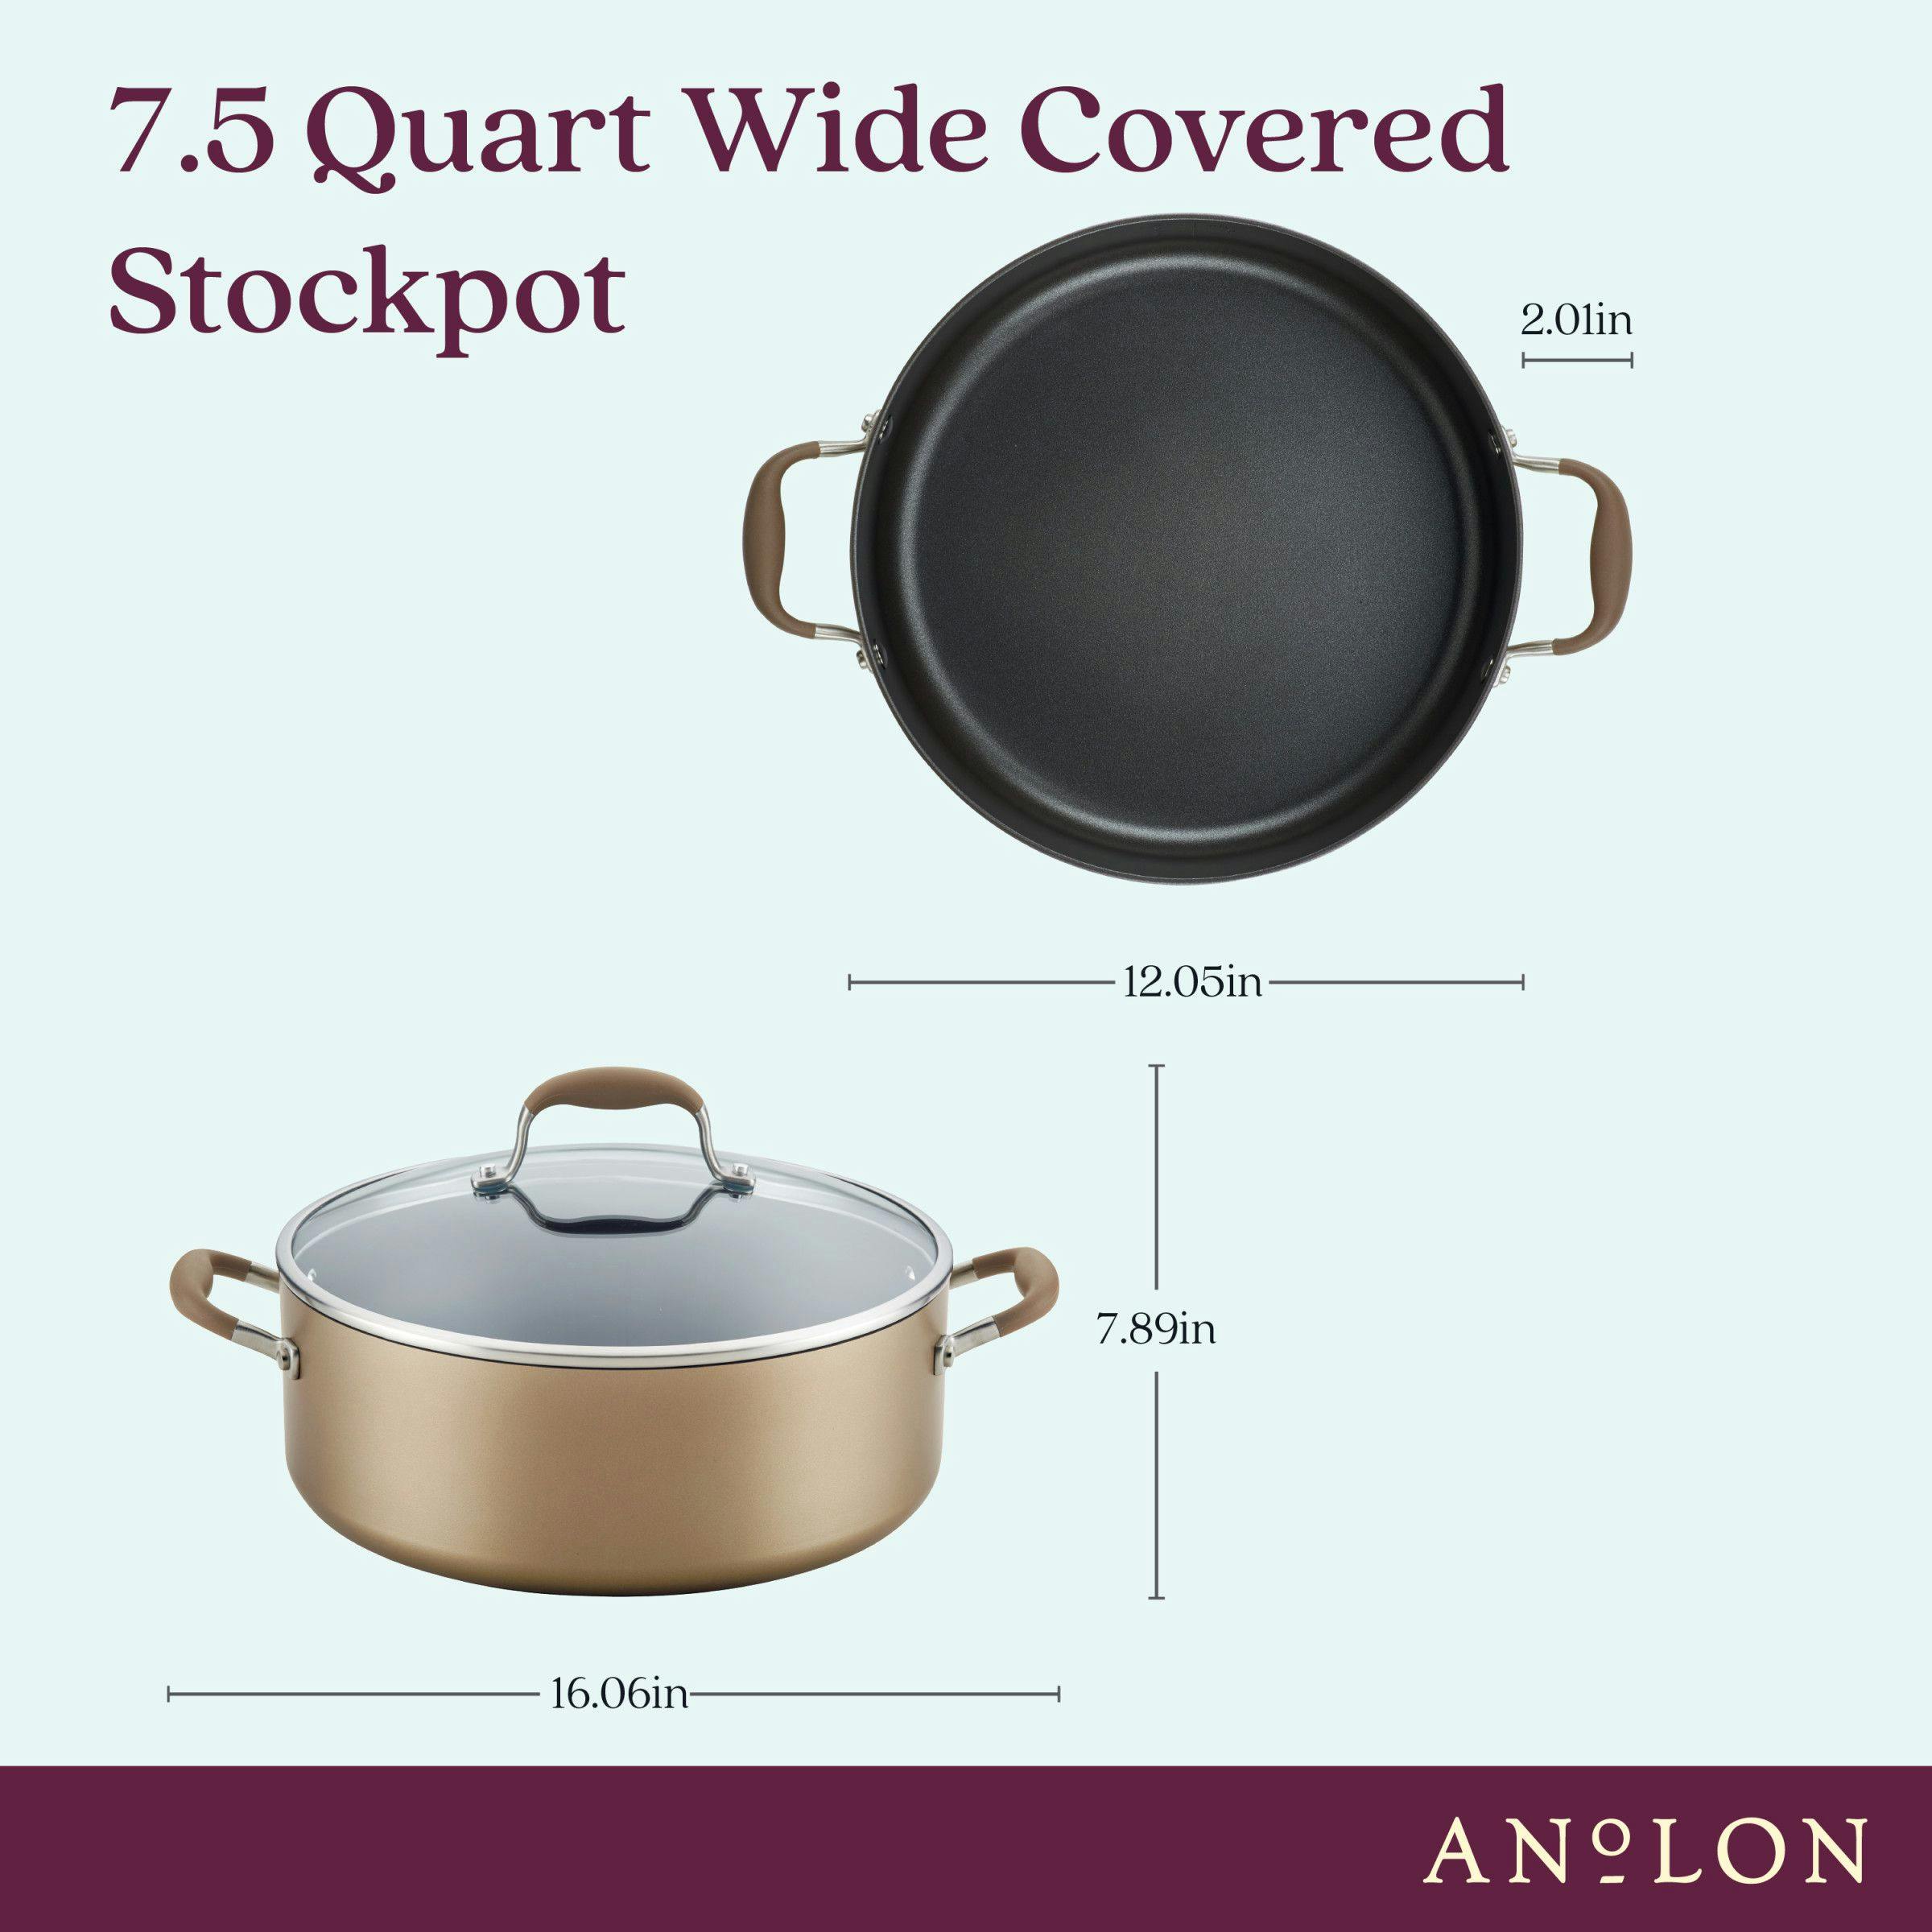 Anolon Advanced Home Hard-Anodized Nonstick 2-Qt. Saucepan